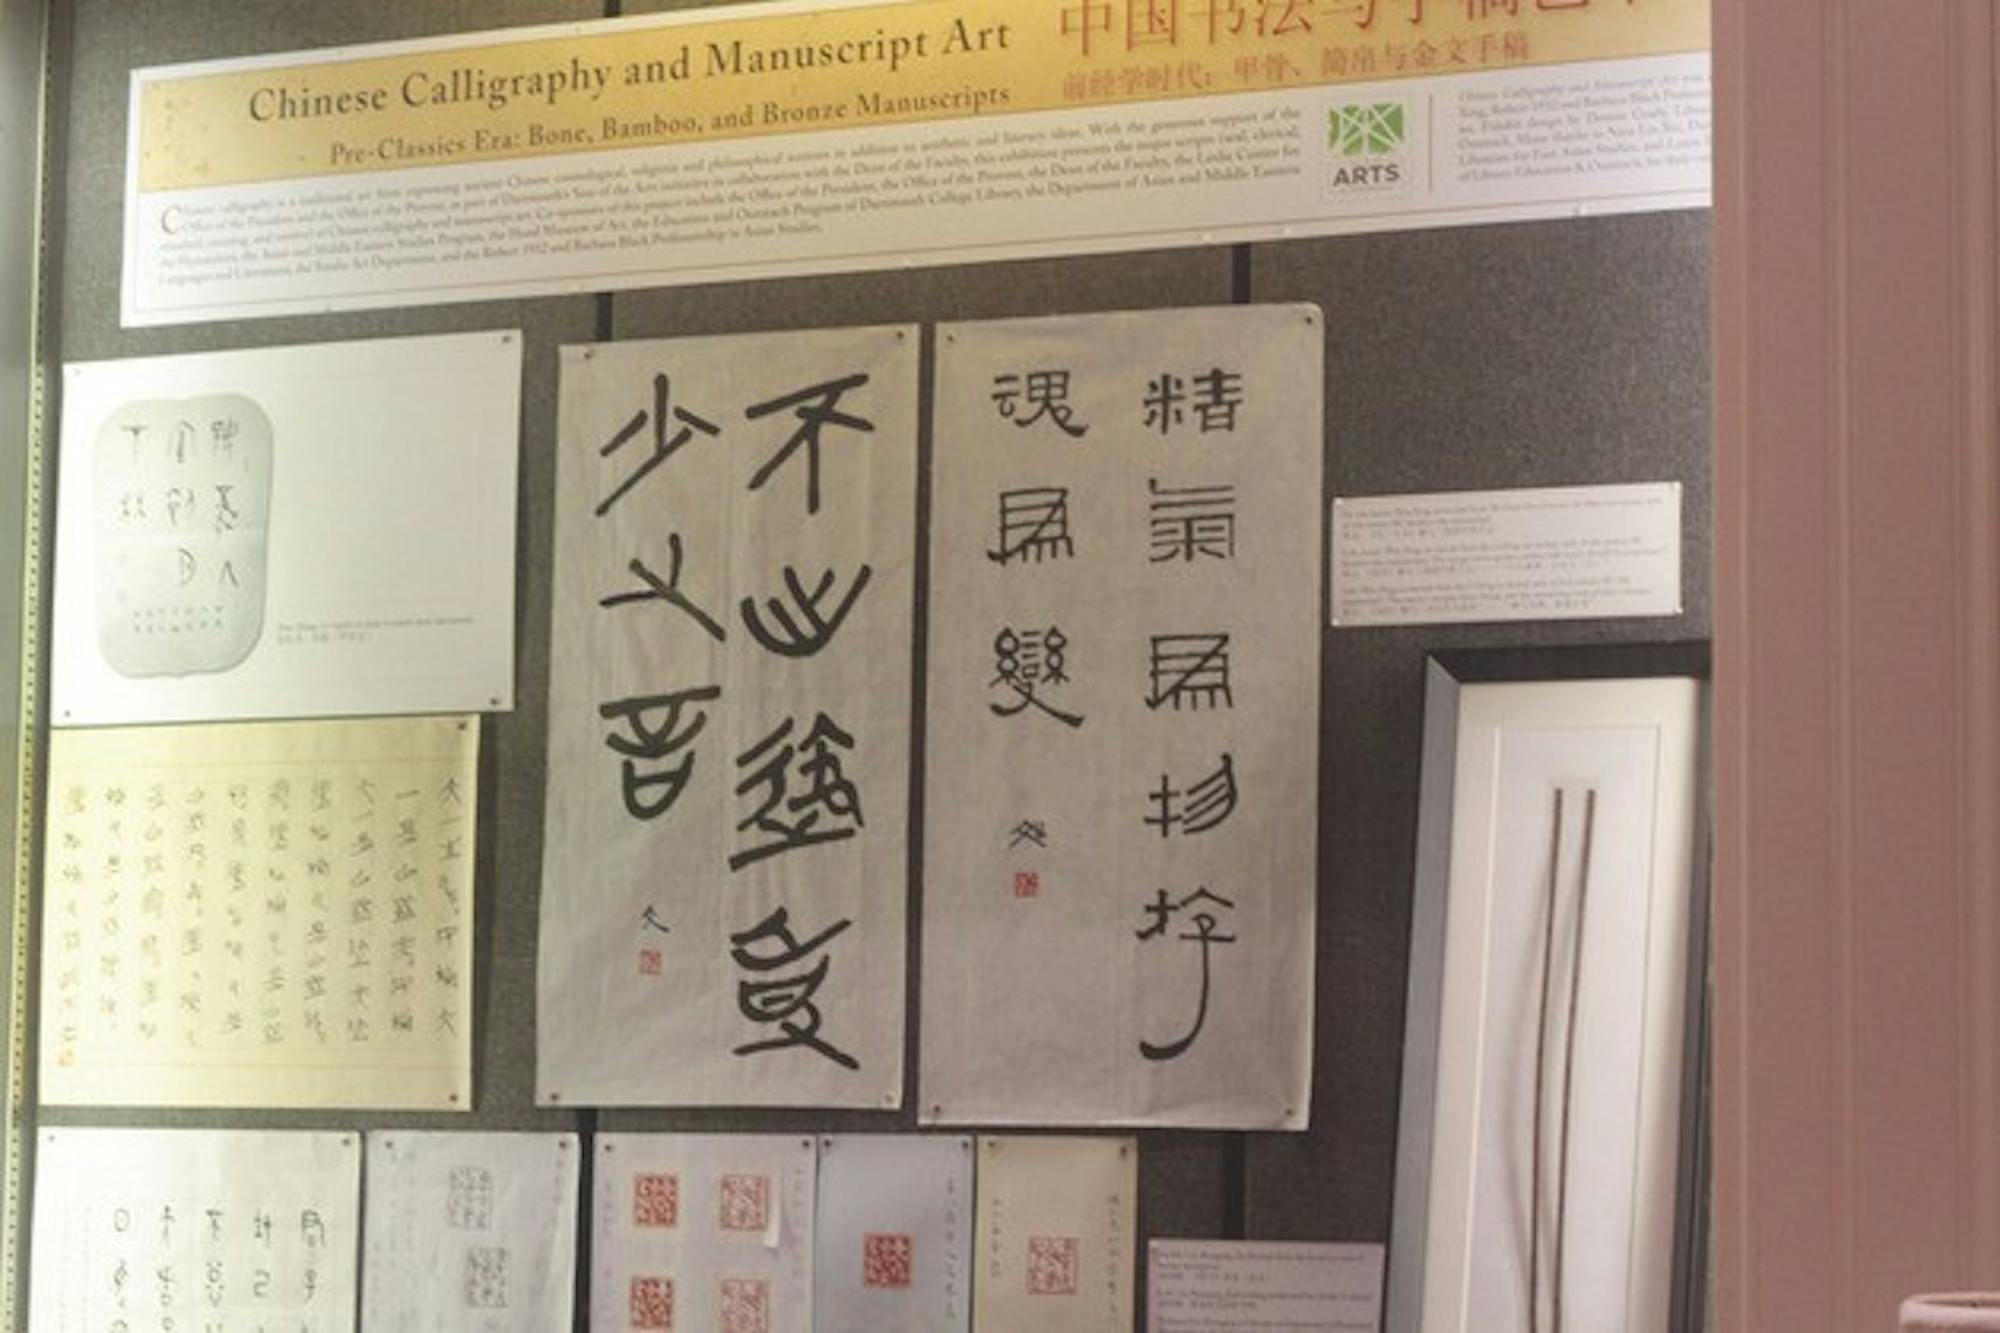 10.03.13.arts.chinesecalligraphy